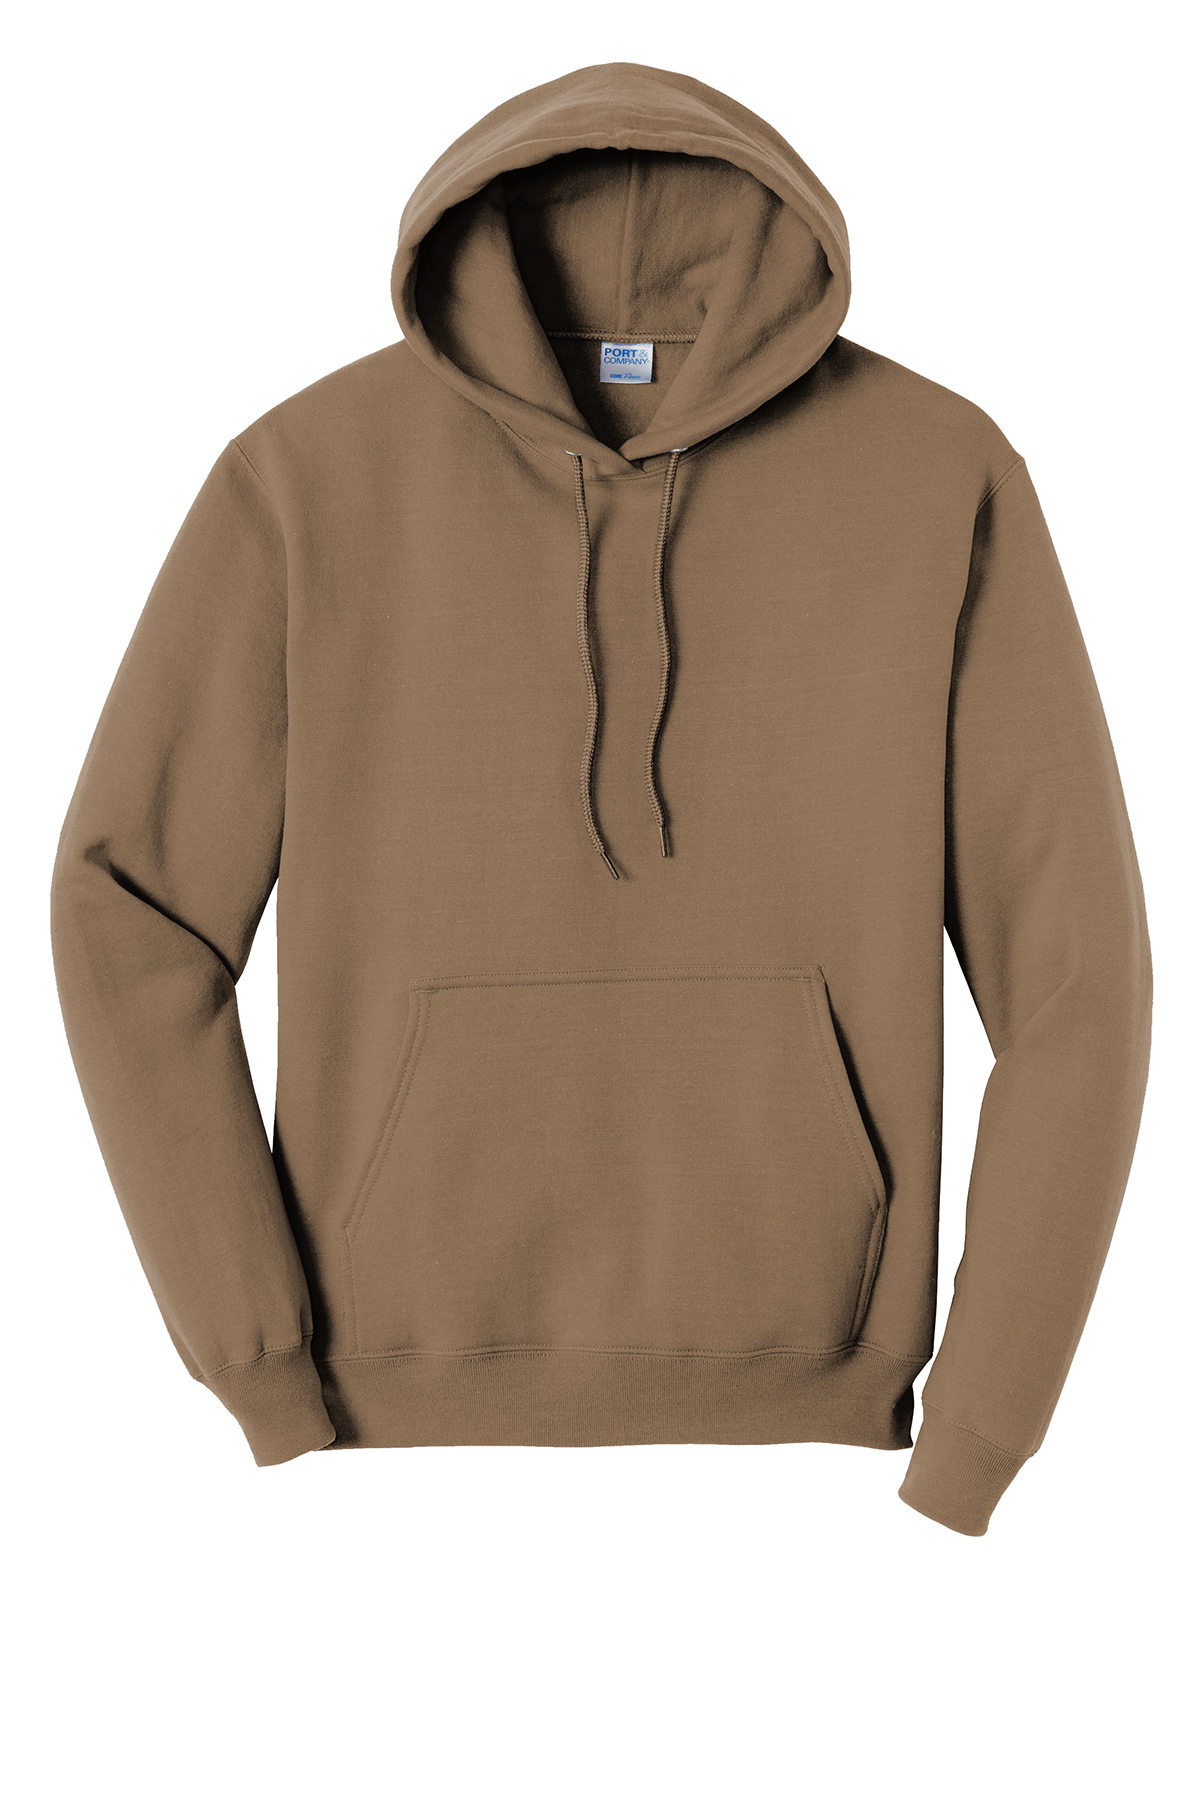 Hooded Company Product Port | & & Fleece Company Sweatshirt | Port Pullover Core